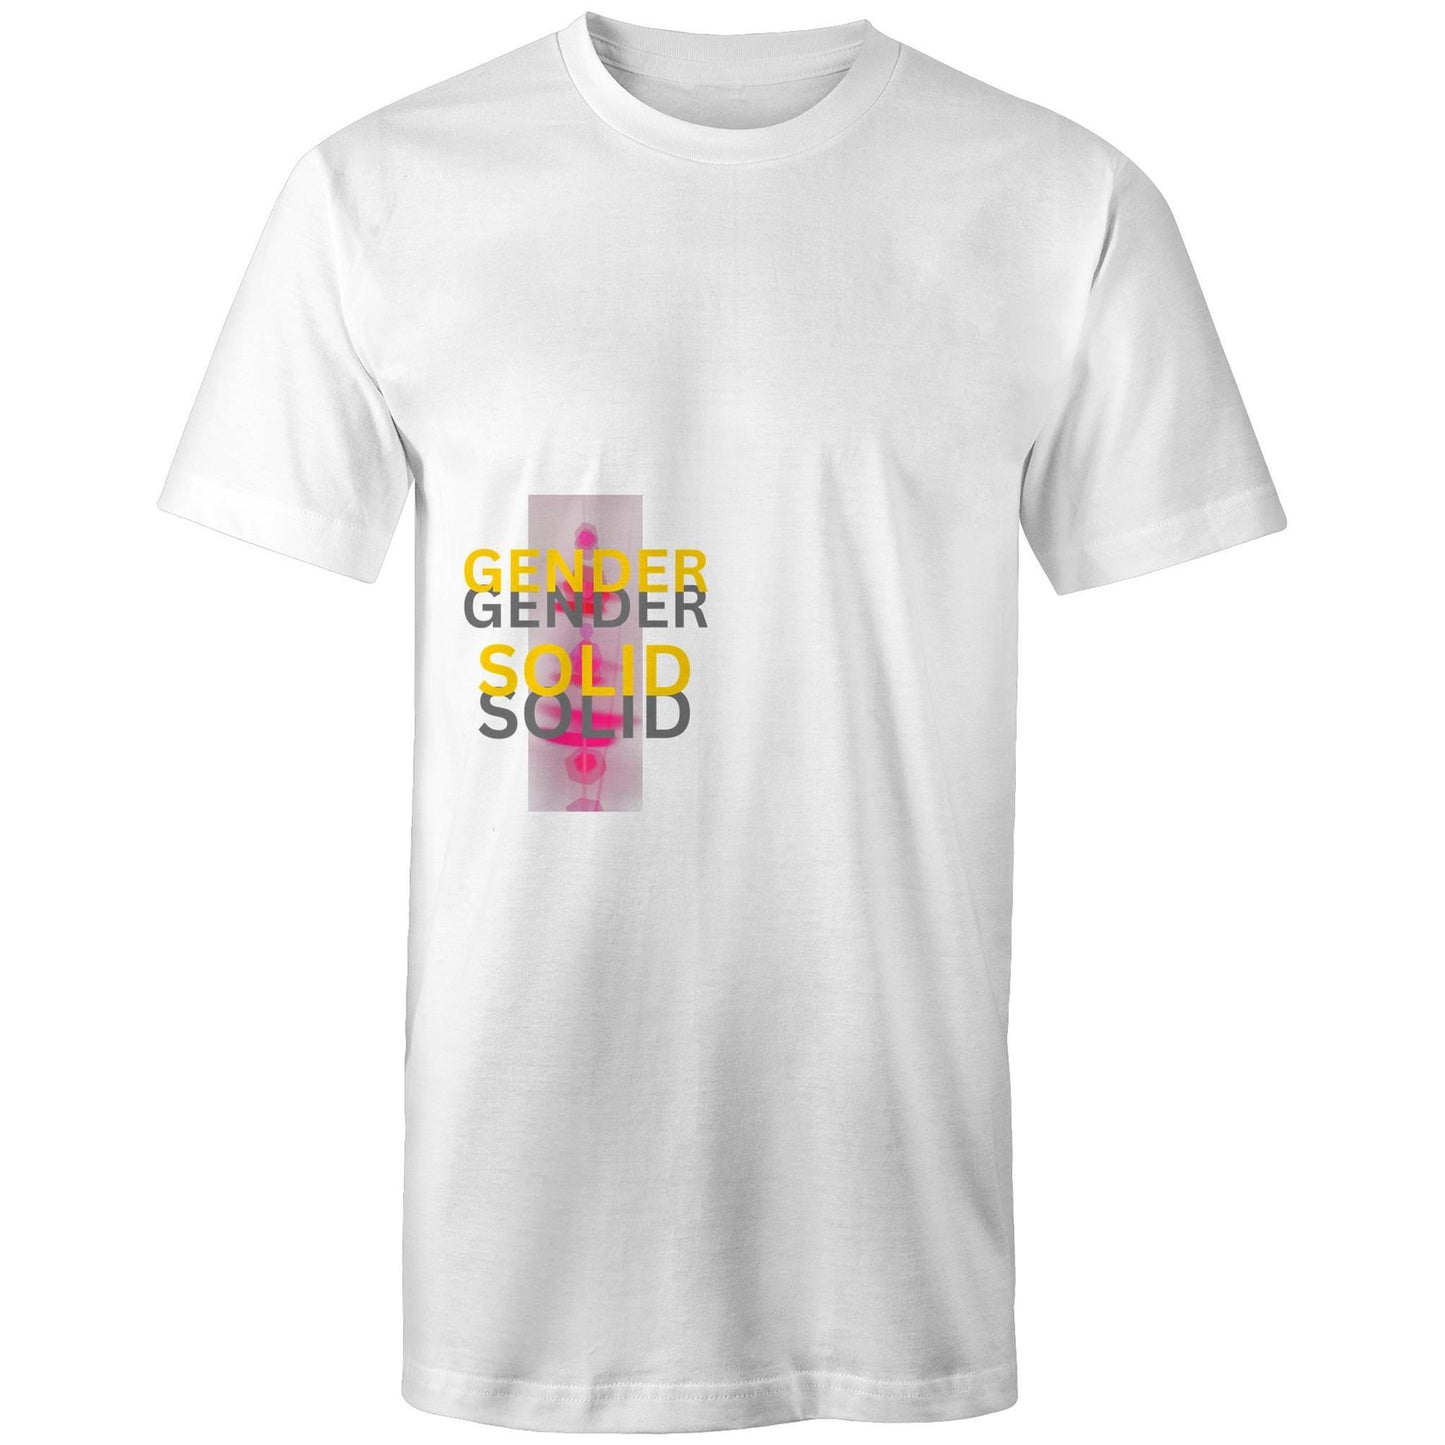 Gender Unisex Adult Tall T-Shirt